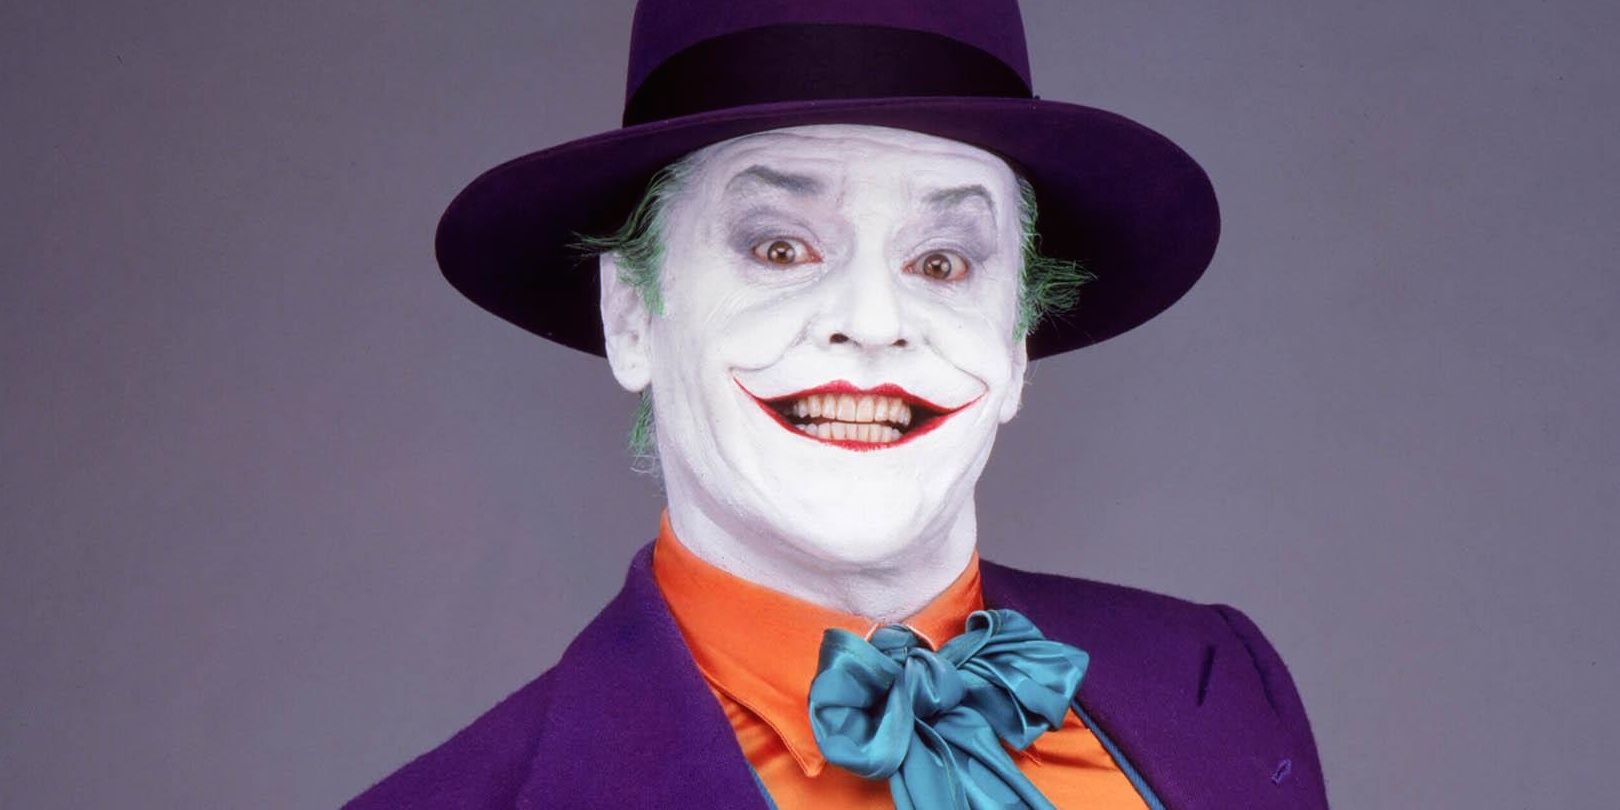 Jack Nicholson puts on a wide smile in Joker makeup